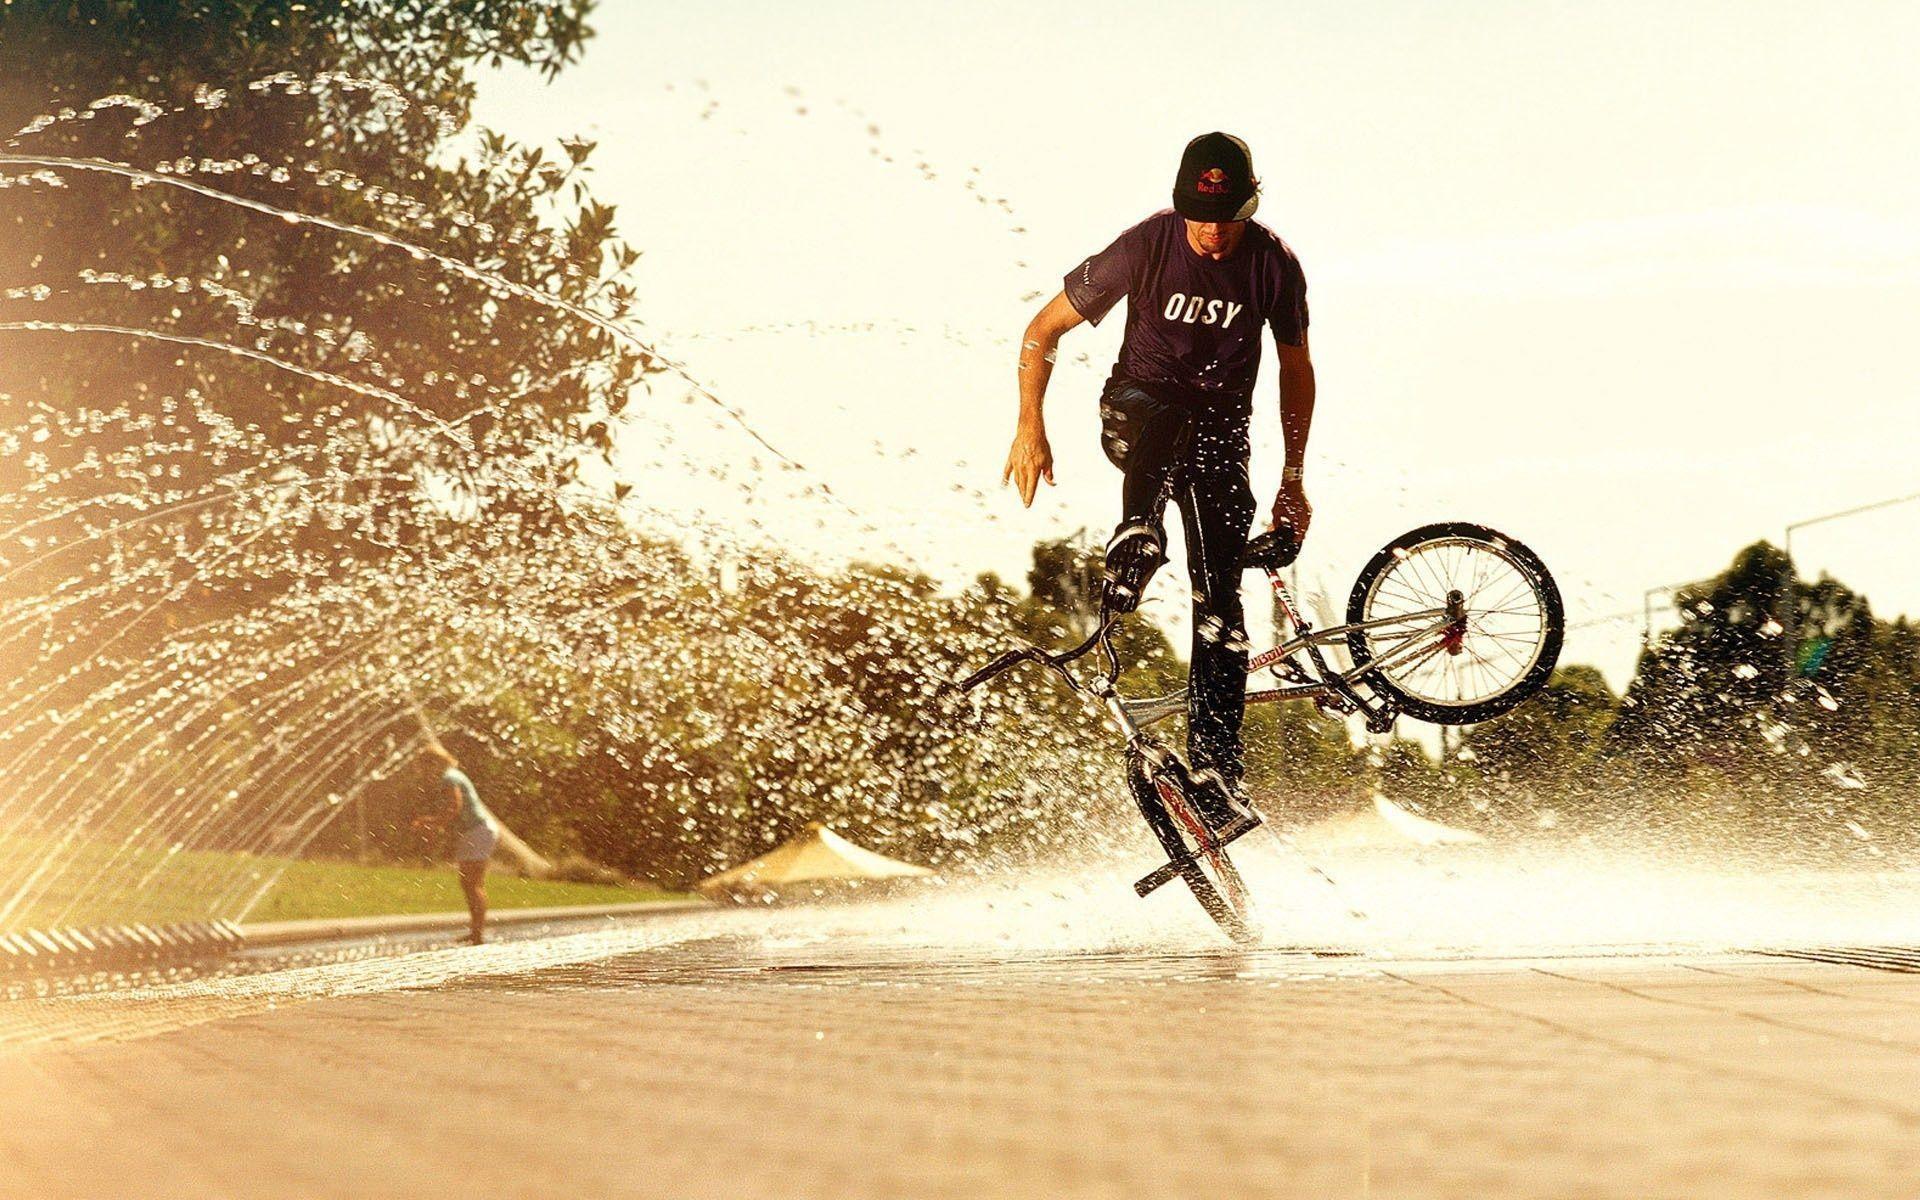 Man Bikecycle Skills In Water Wallpaper